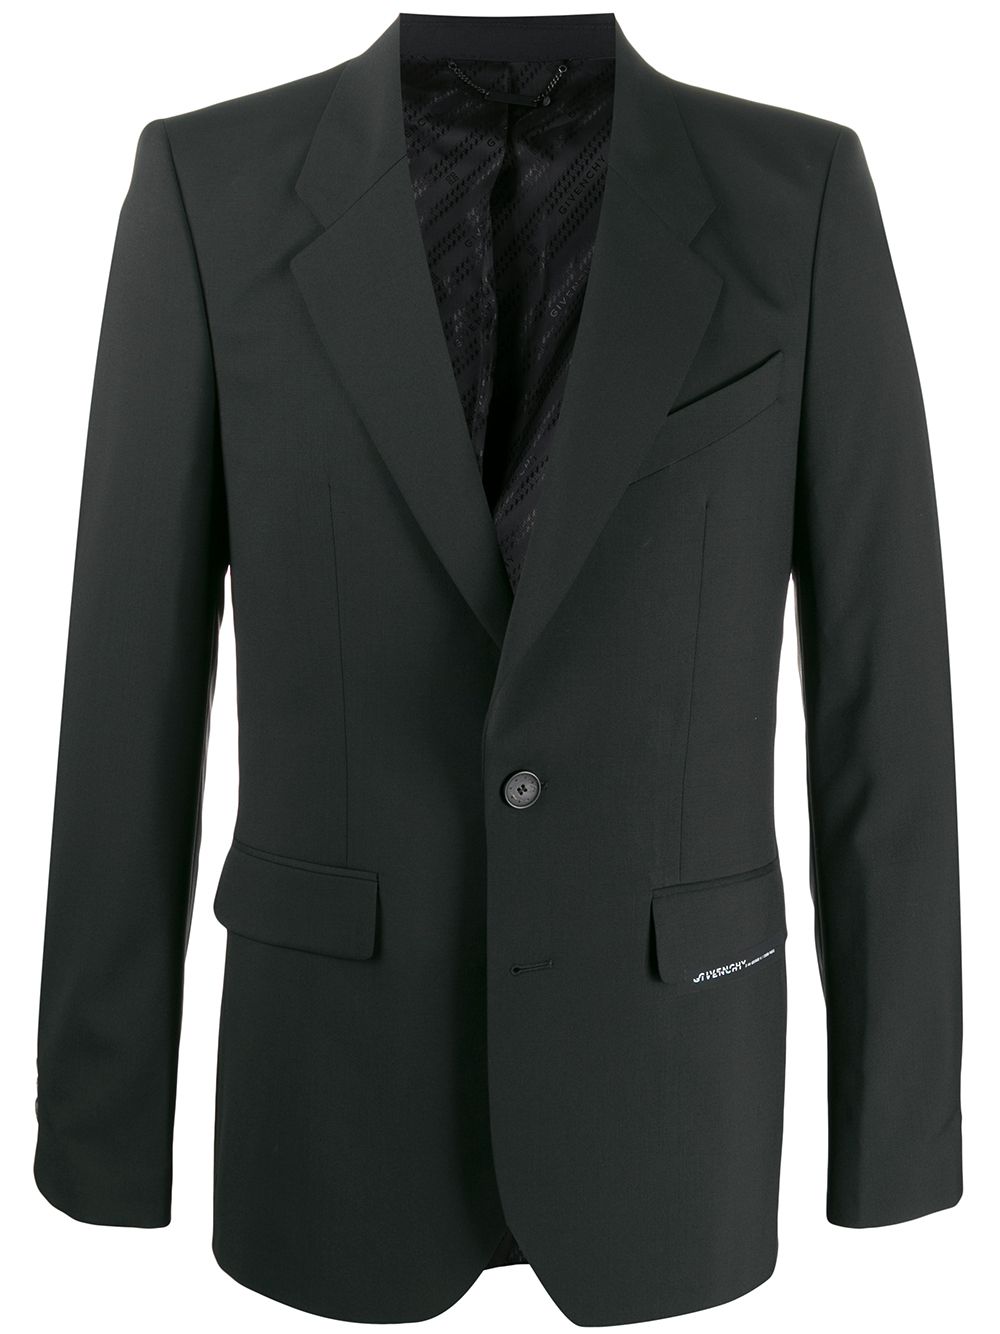 GIVENCHY giacca di lana nera a due bottoni con taschino logato Givenchy in bianco